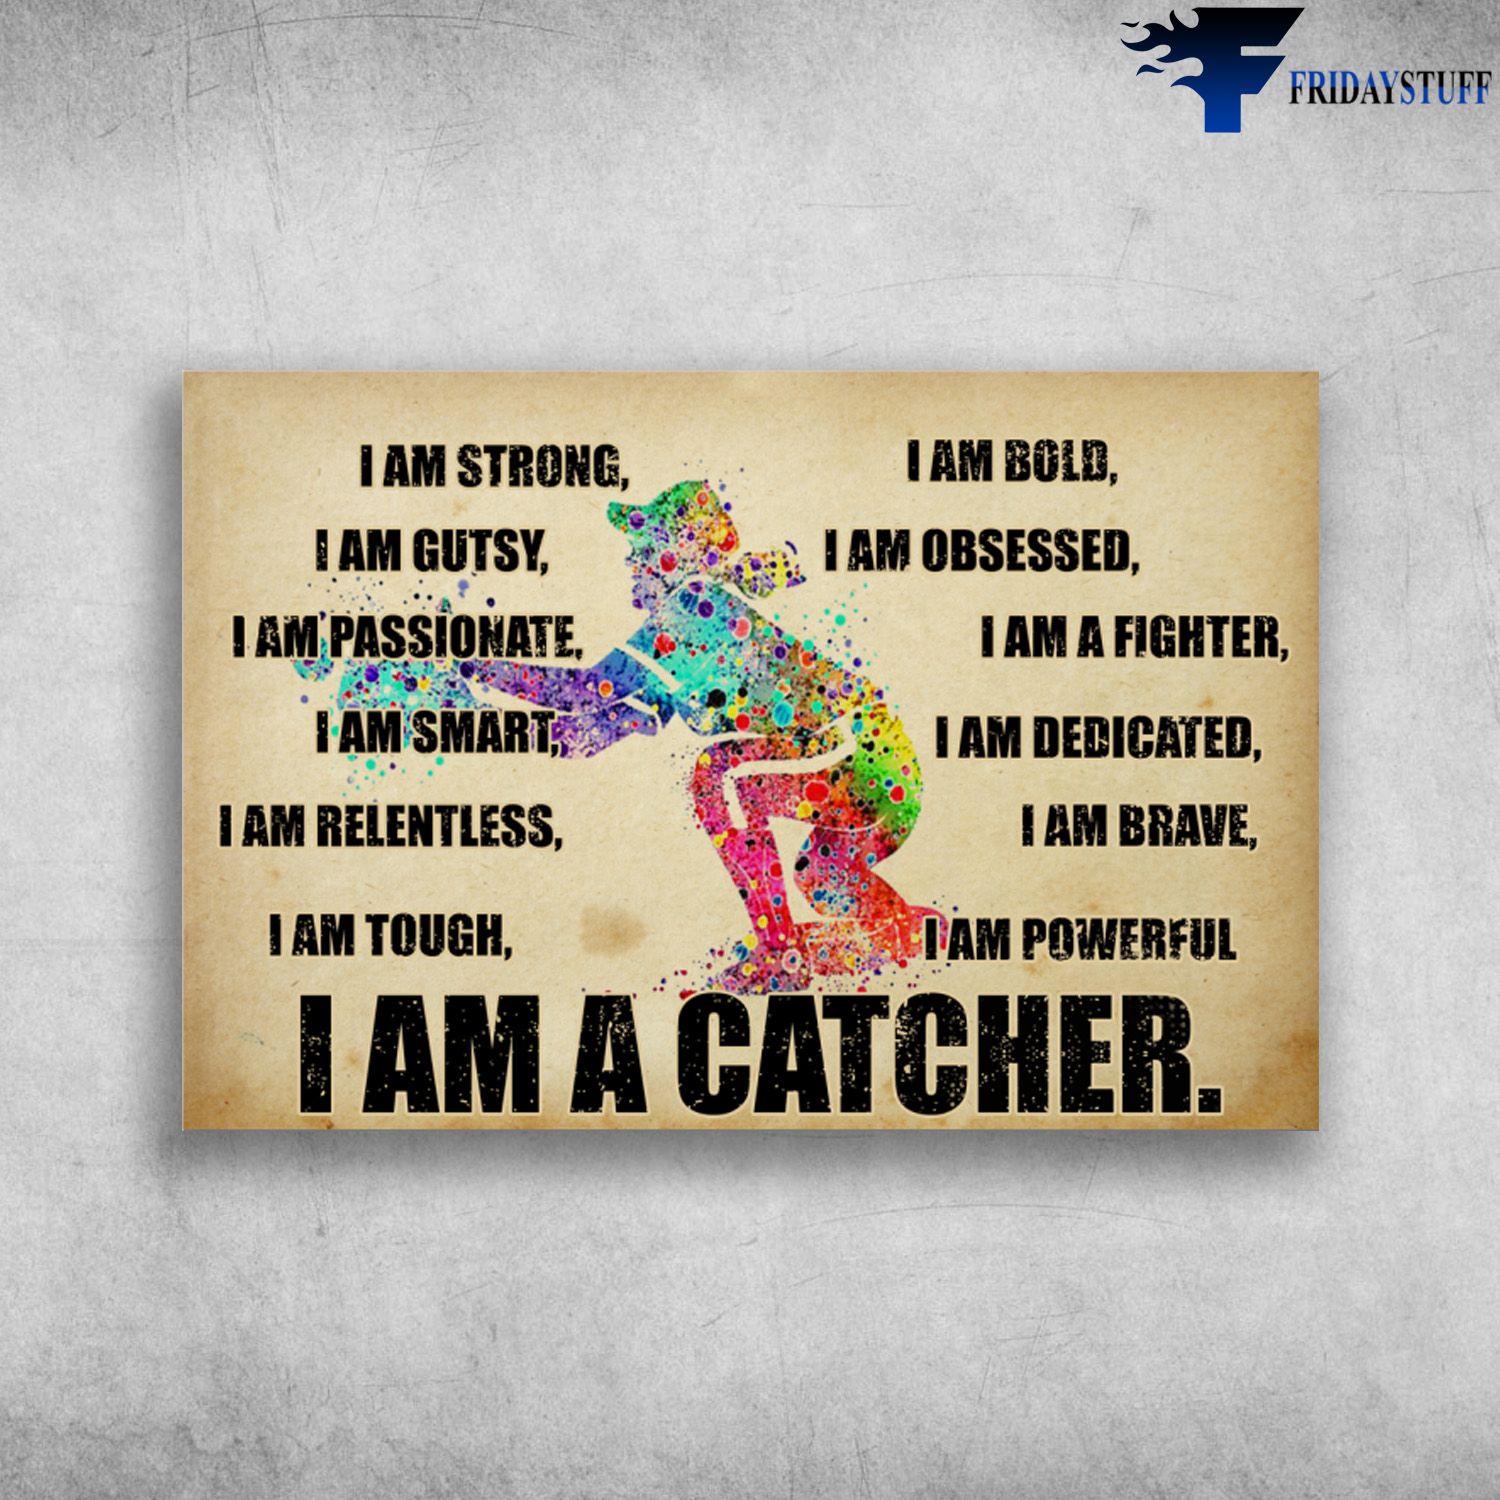 I Am A Catcher - I Am Strong, I Am Gutsy, I Am Passionate